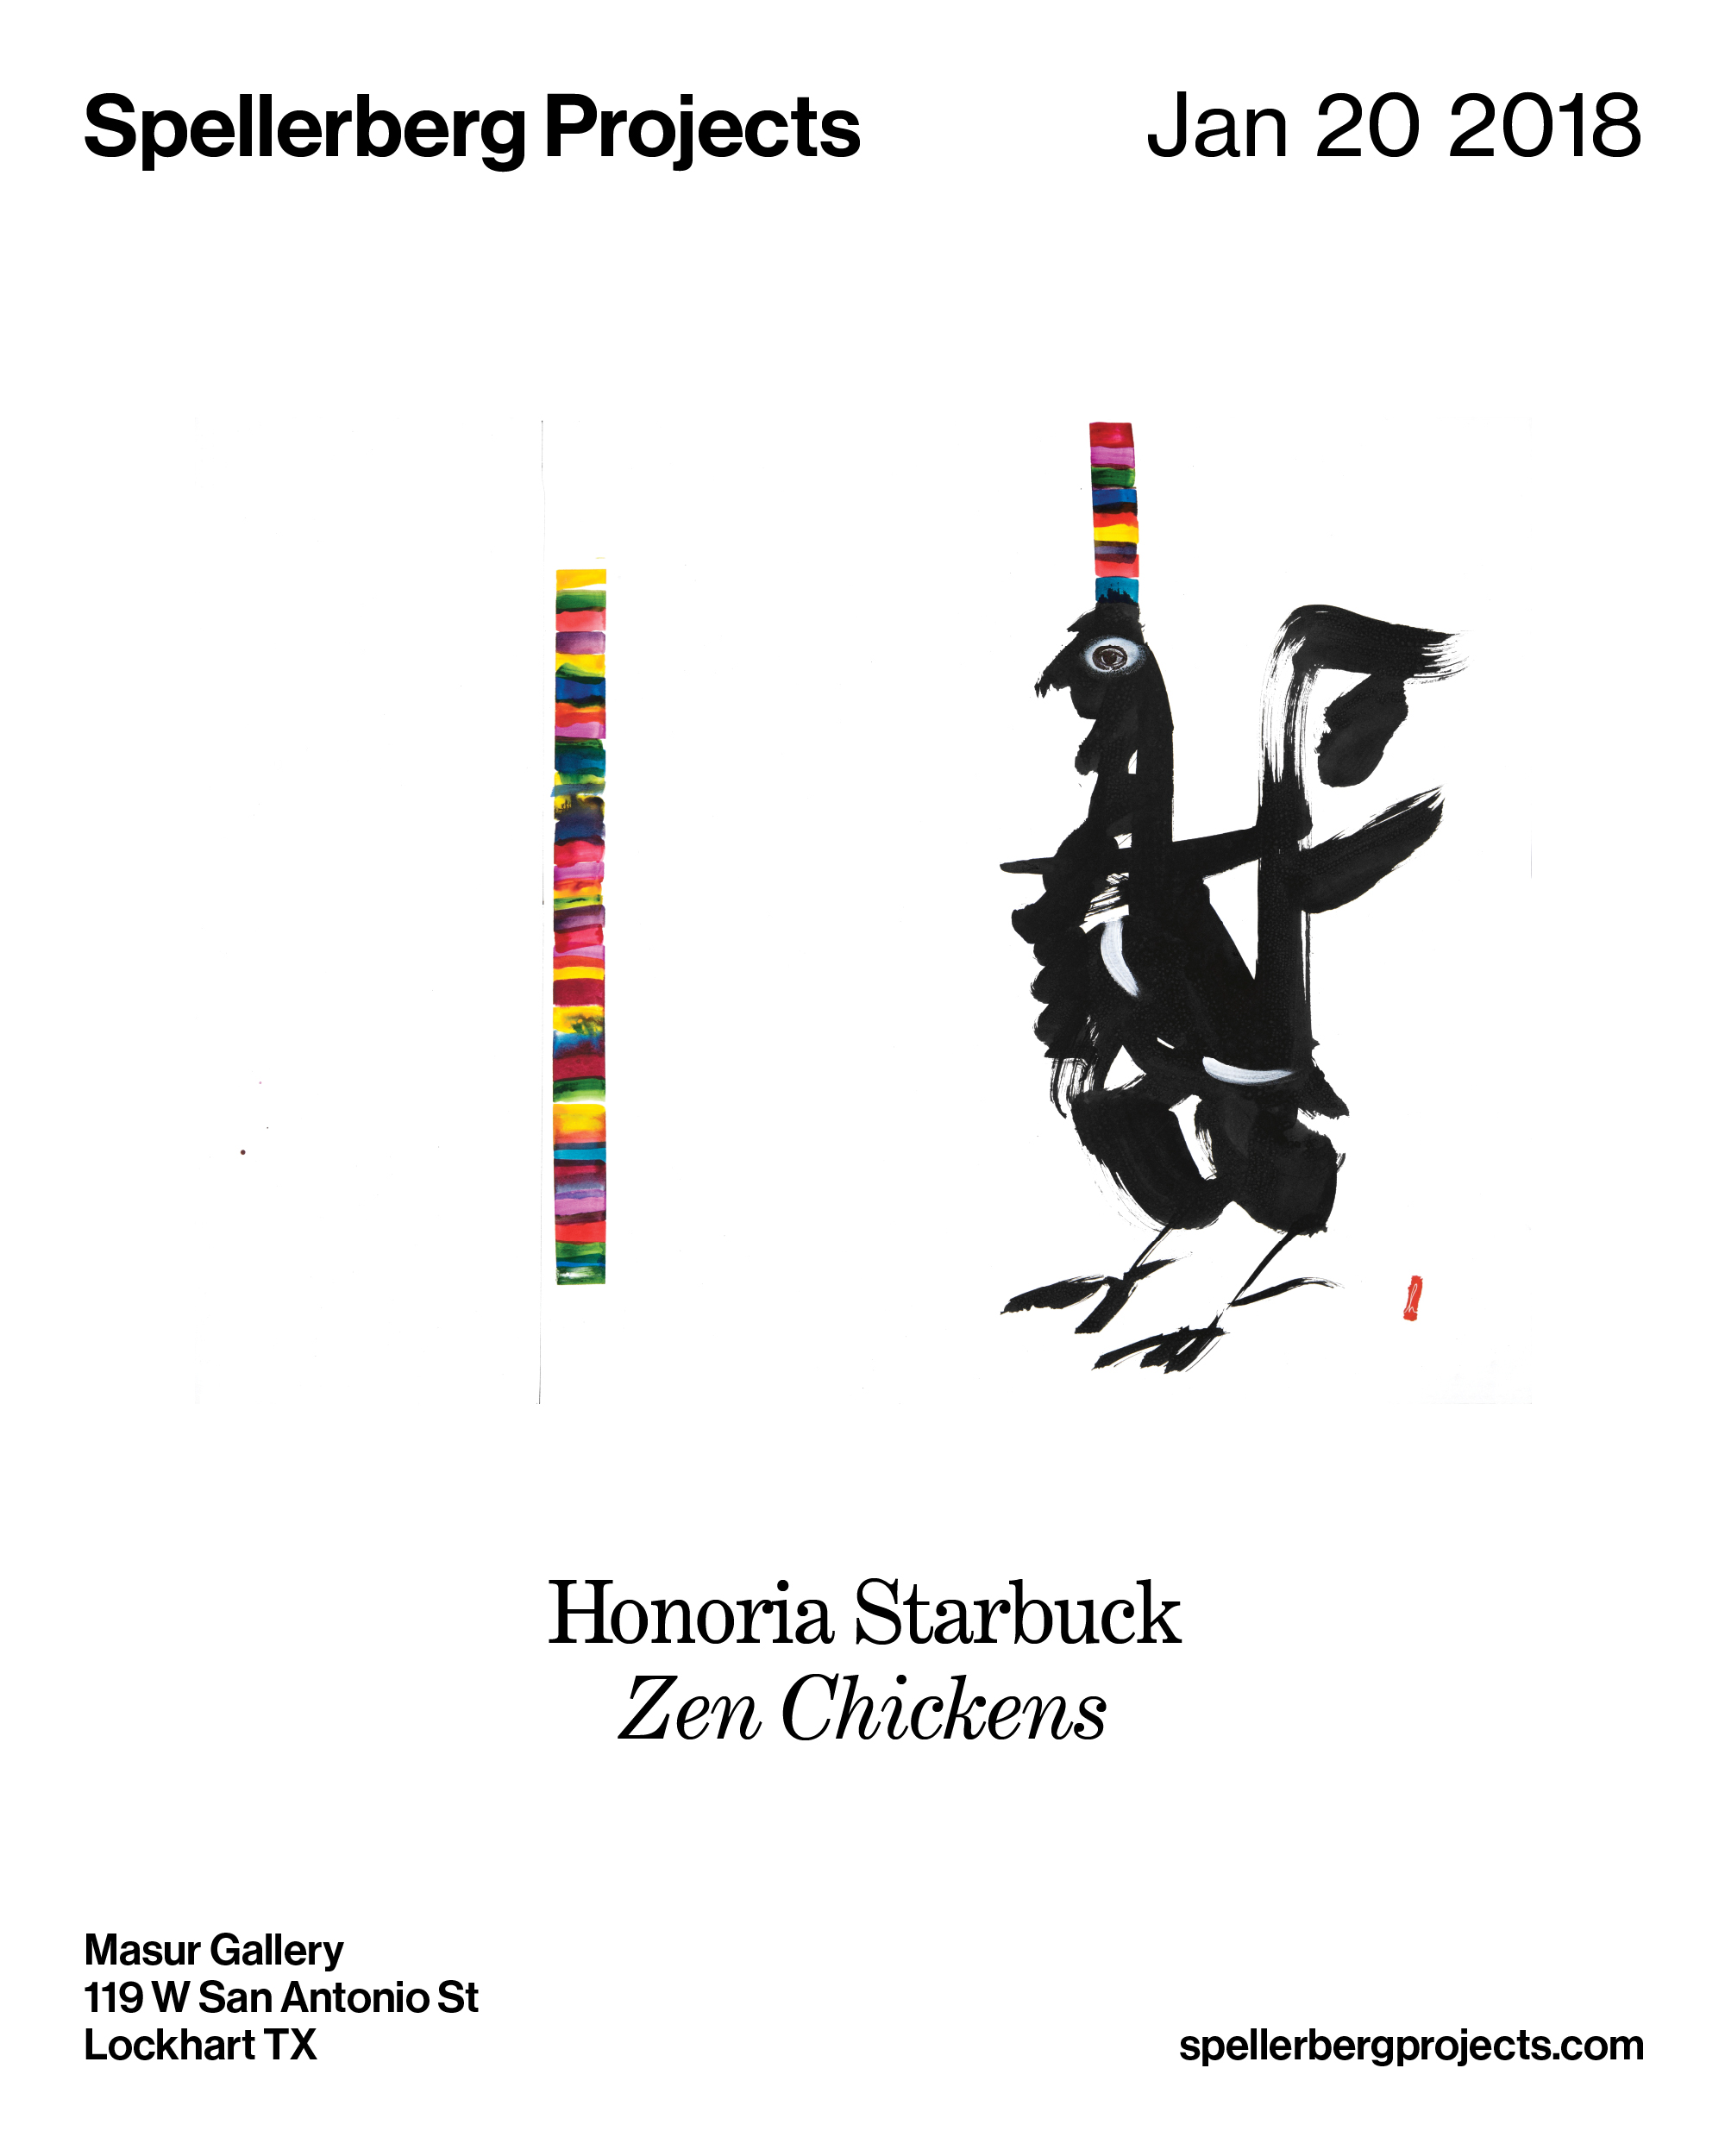 honoria starbuck on X: Hanifa inspired Vogue Zen Chicken. Daily